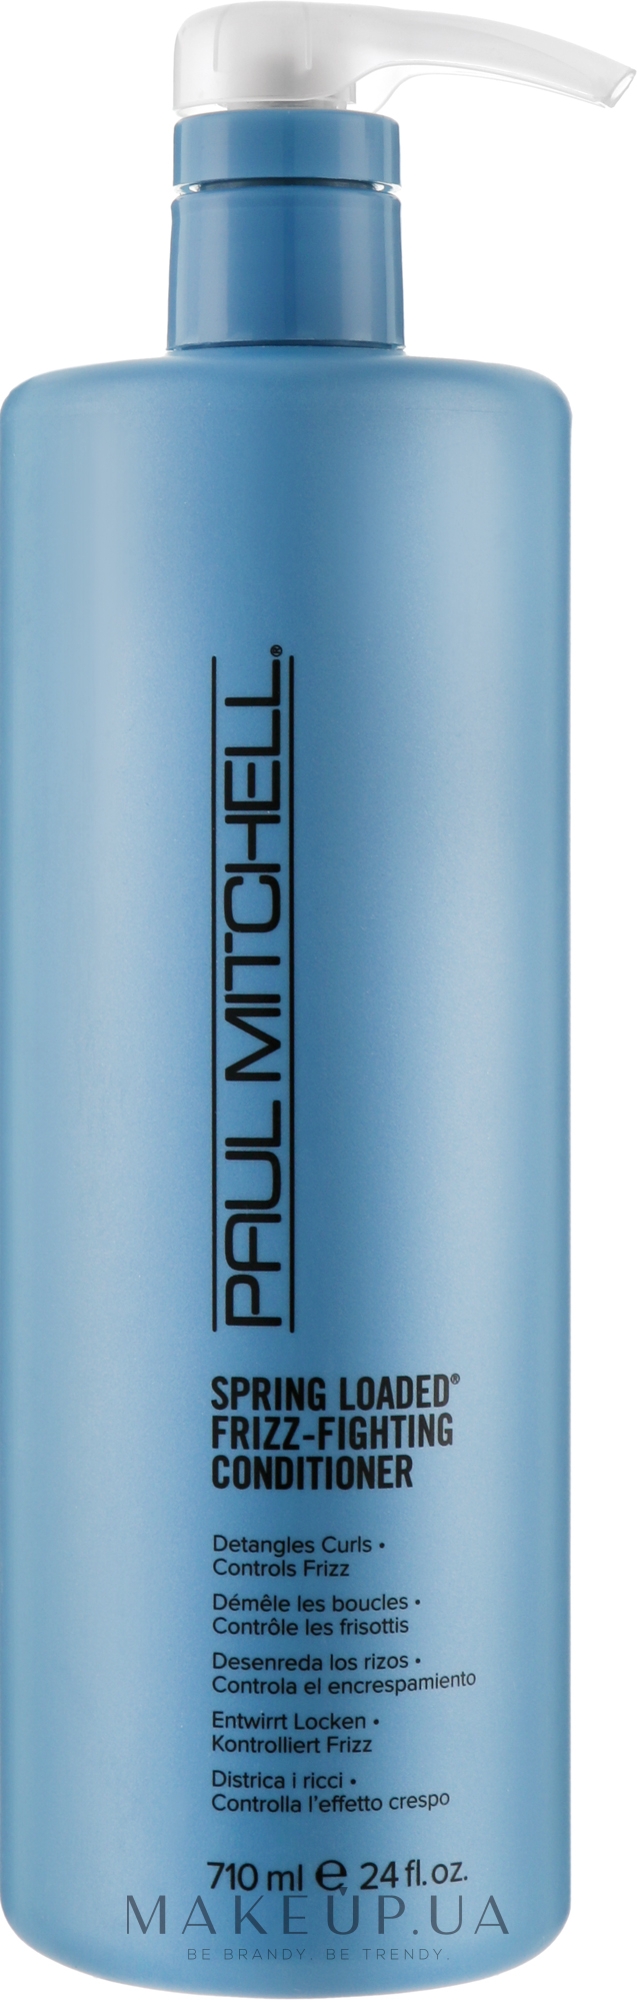 Кондиционер для вьющихся волос - Paul Mitchell Spring Loaded Frizz-Fighting Conditioner — фото 710ml